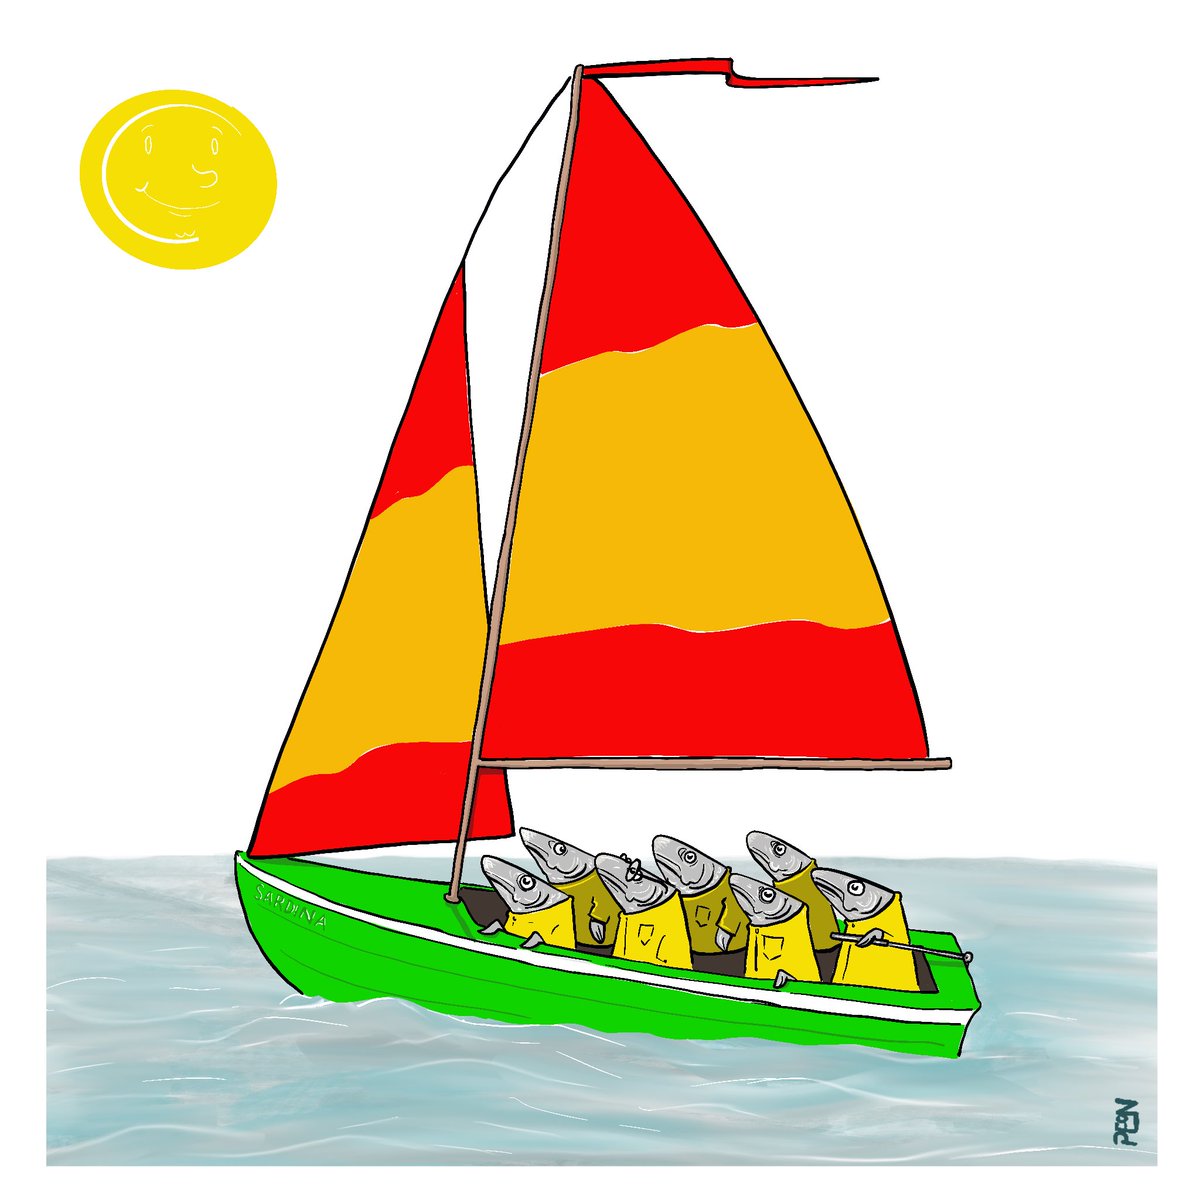 Bring me the horizon! It’s time for #AnimalAlphabets 
Channeling my inner #richardscarry ‘7 Spanish sardines on a sailboat’
Thank you @AnimalAlphabets #digitalart #illustration #peon #sailboat 🚤